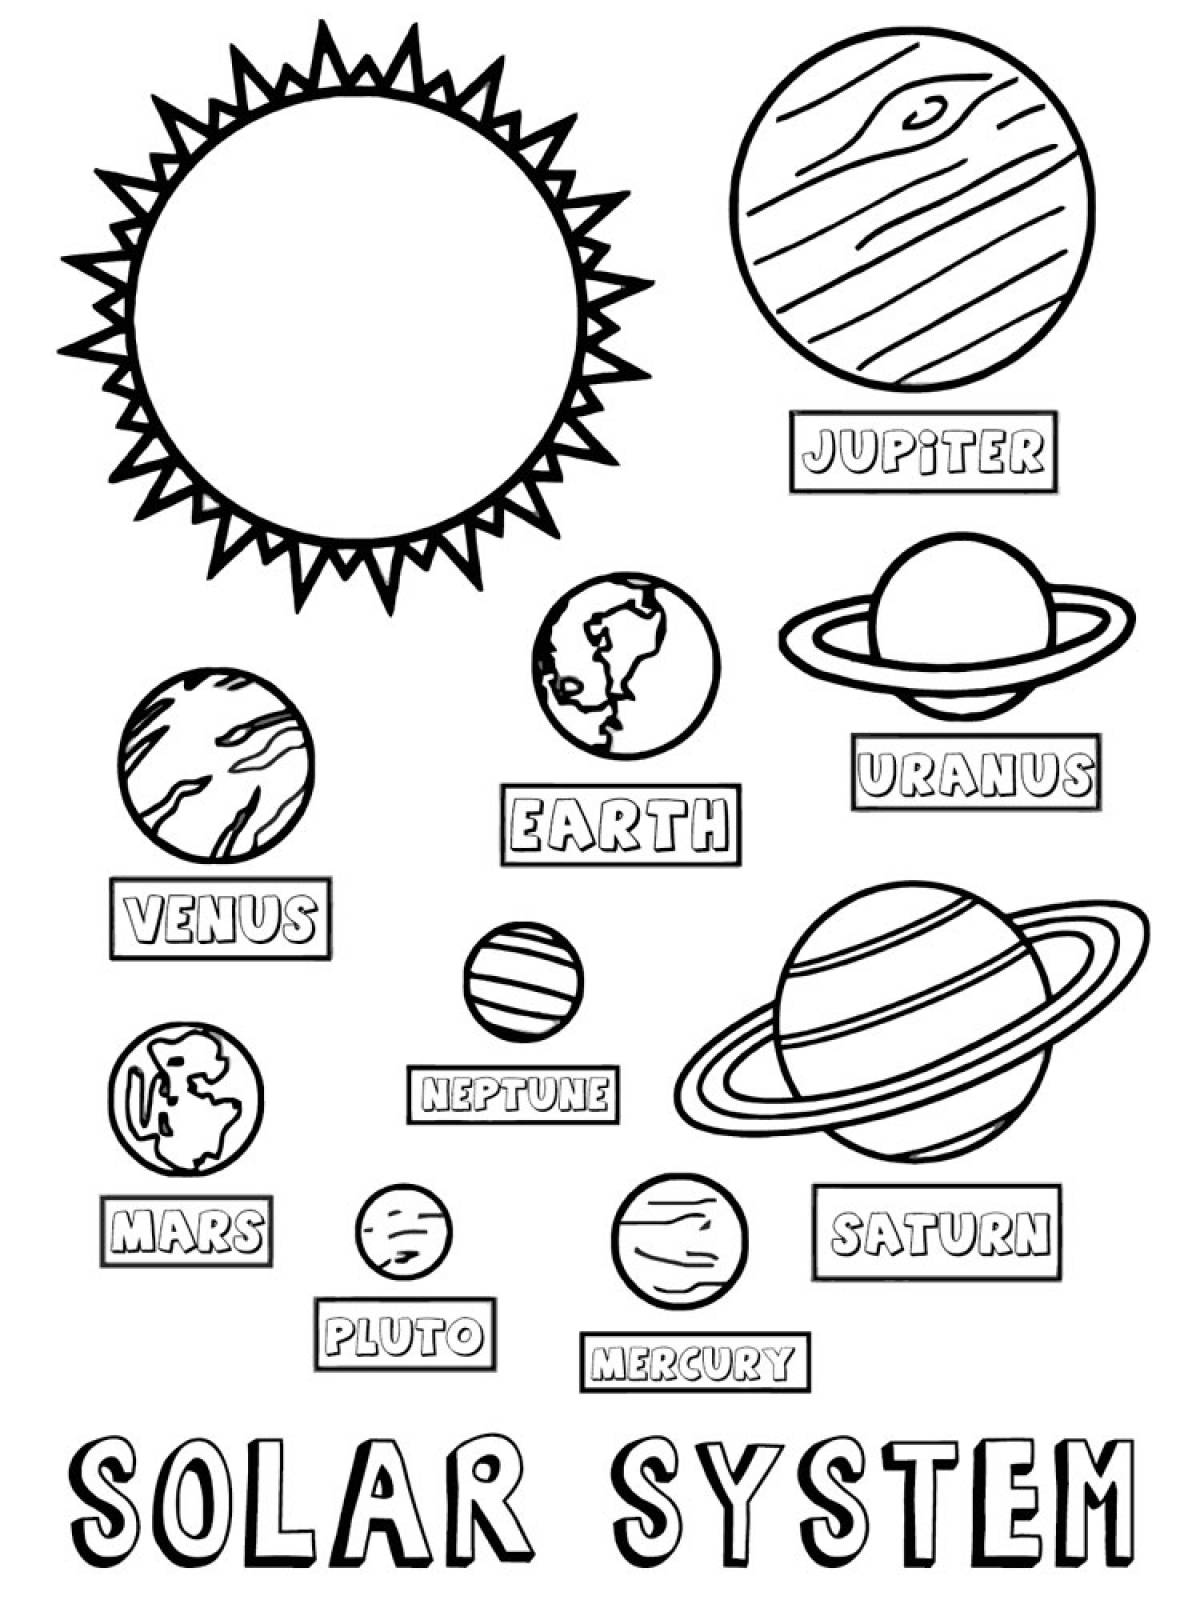 Solar system 11